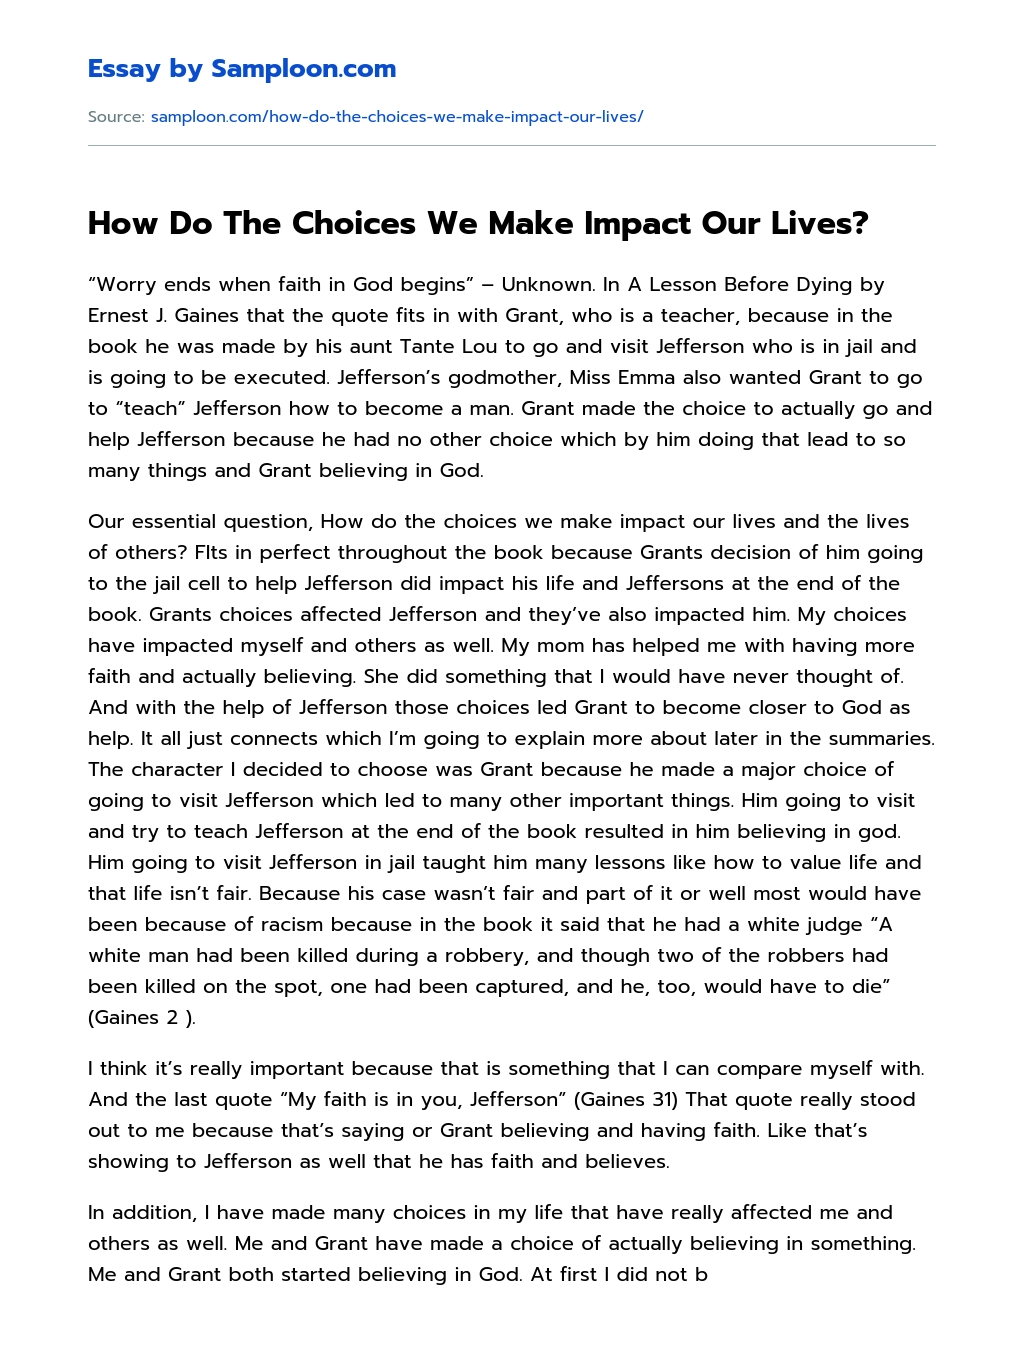 How Do The Choices We Make Impact Our Lives? essay